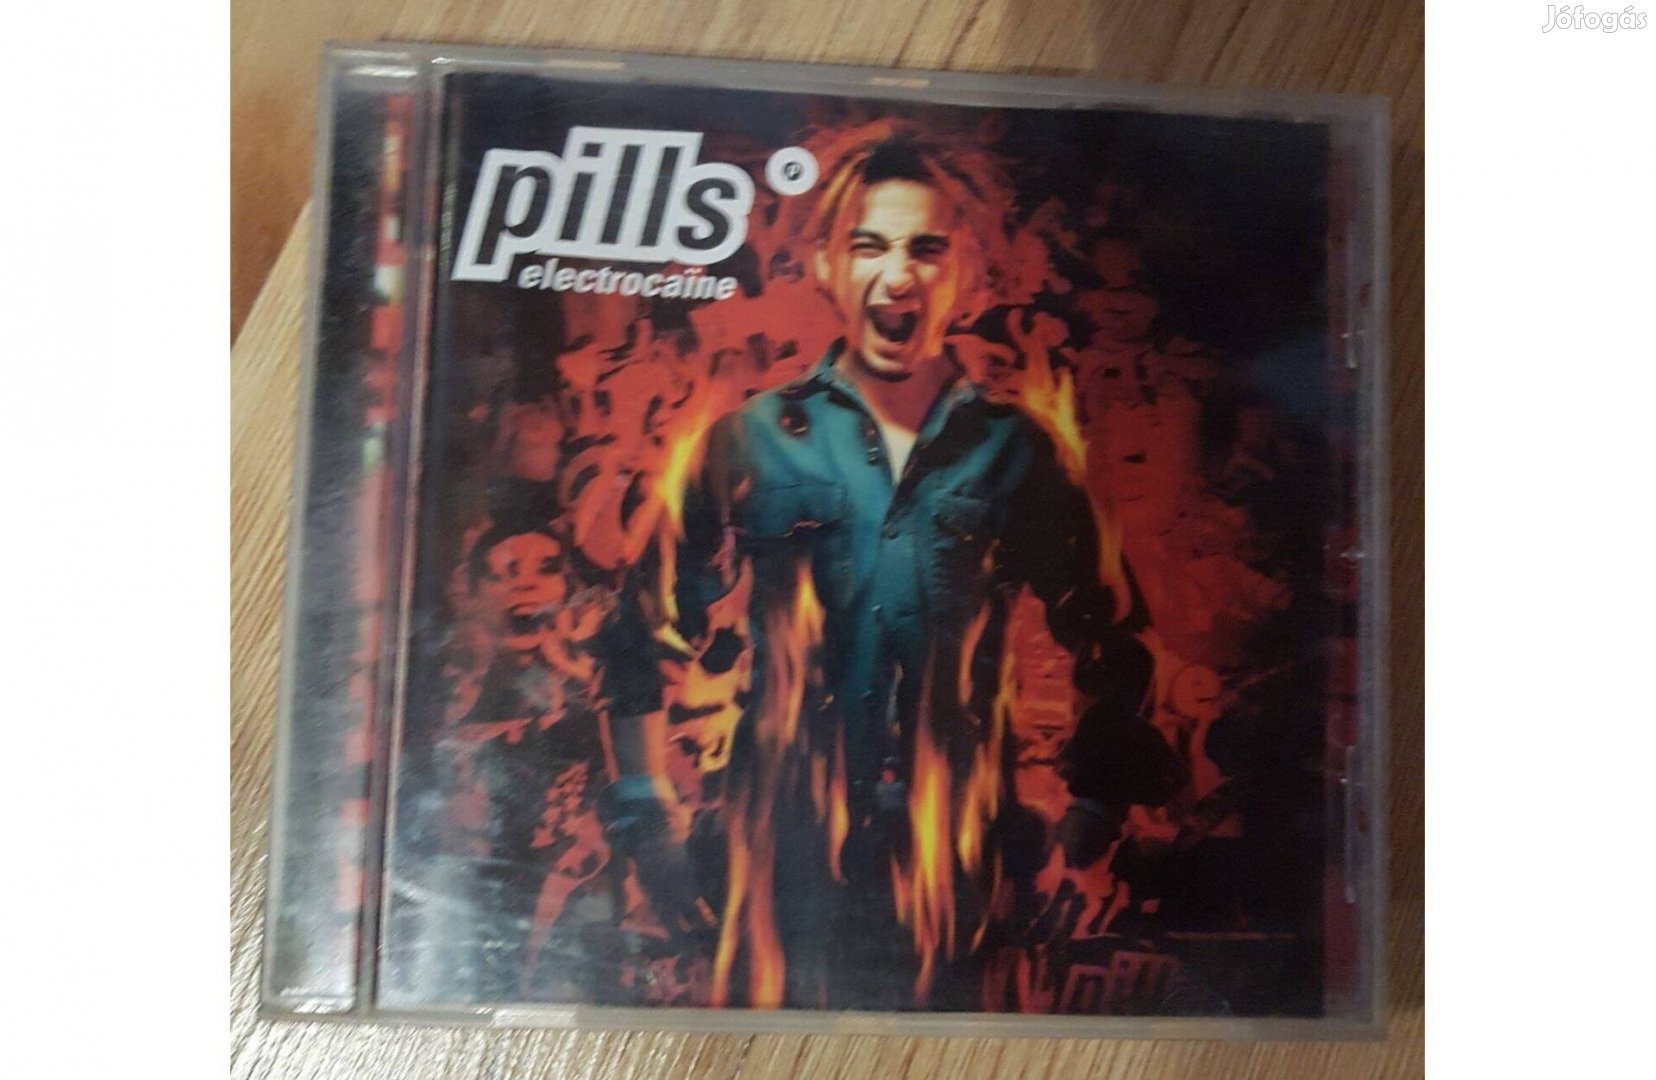 Pills - Electrocaine CD